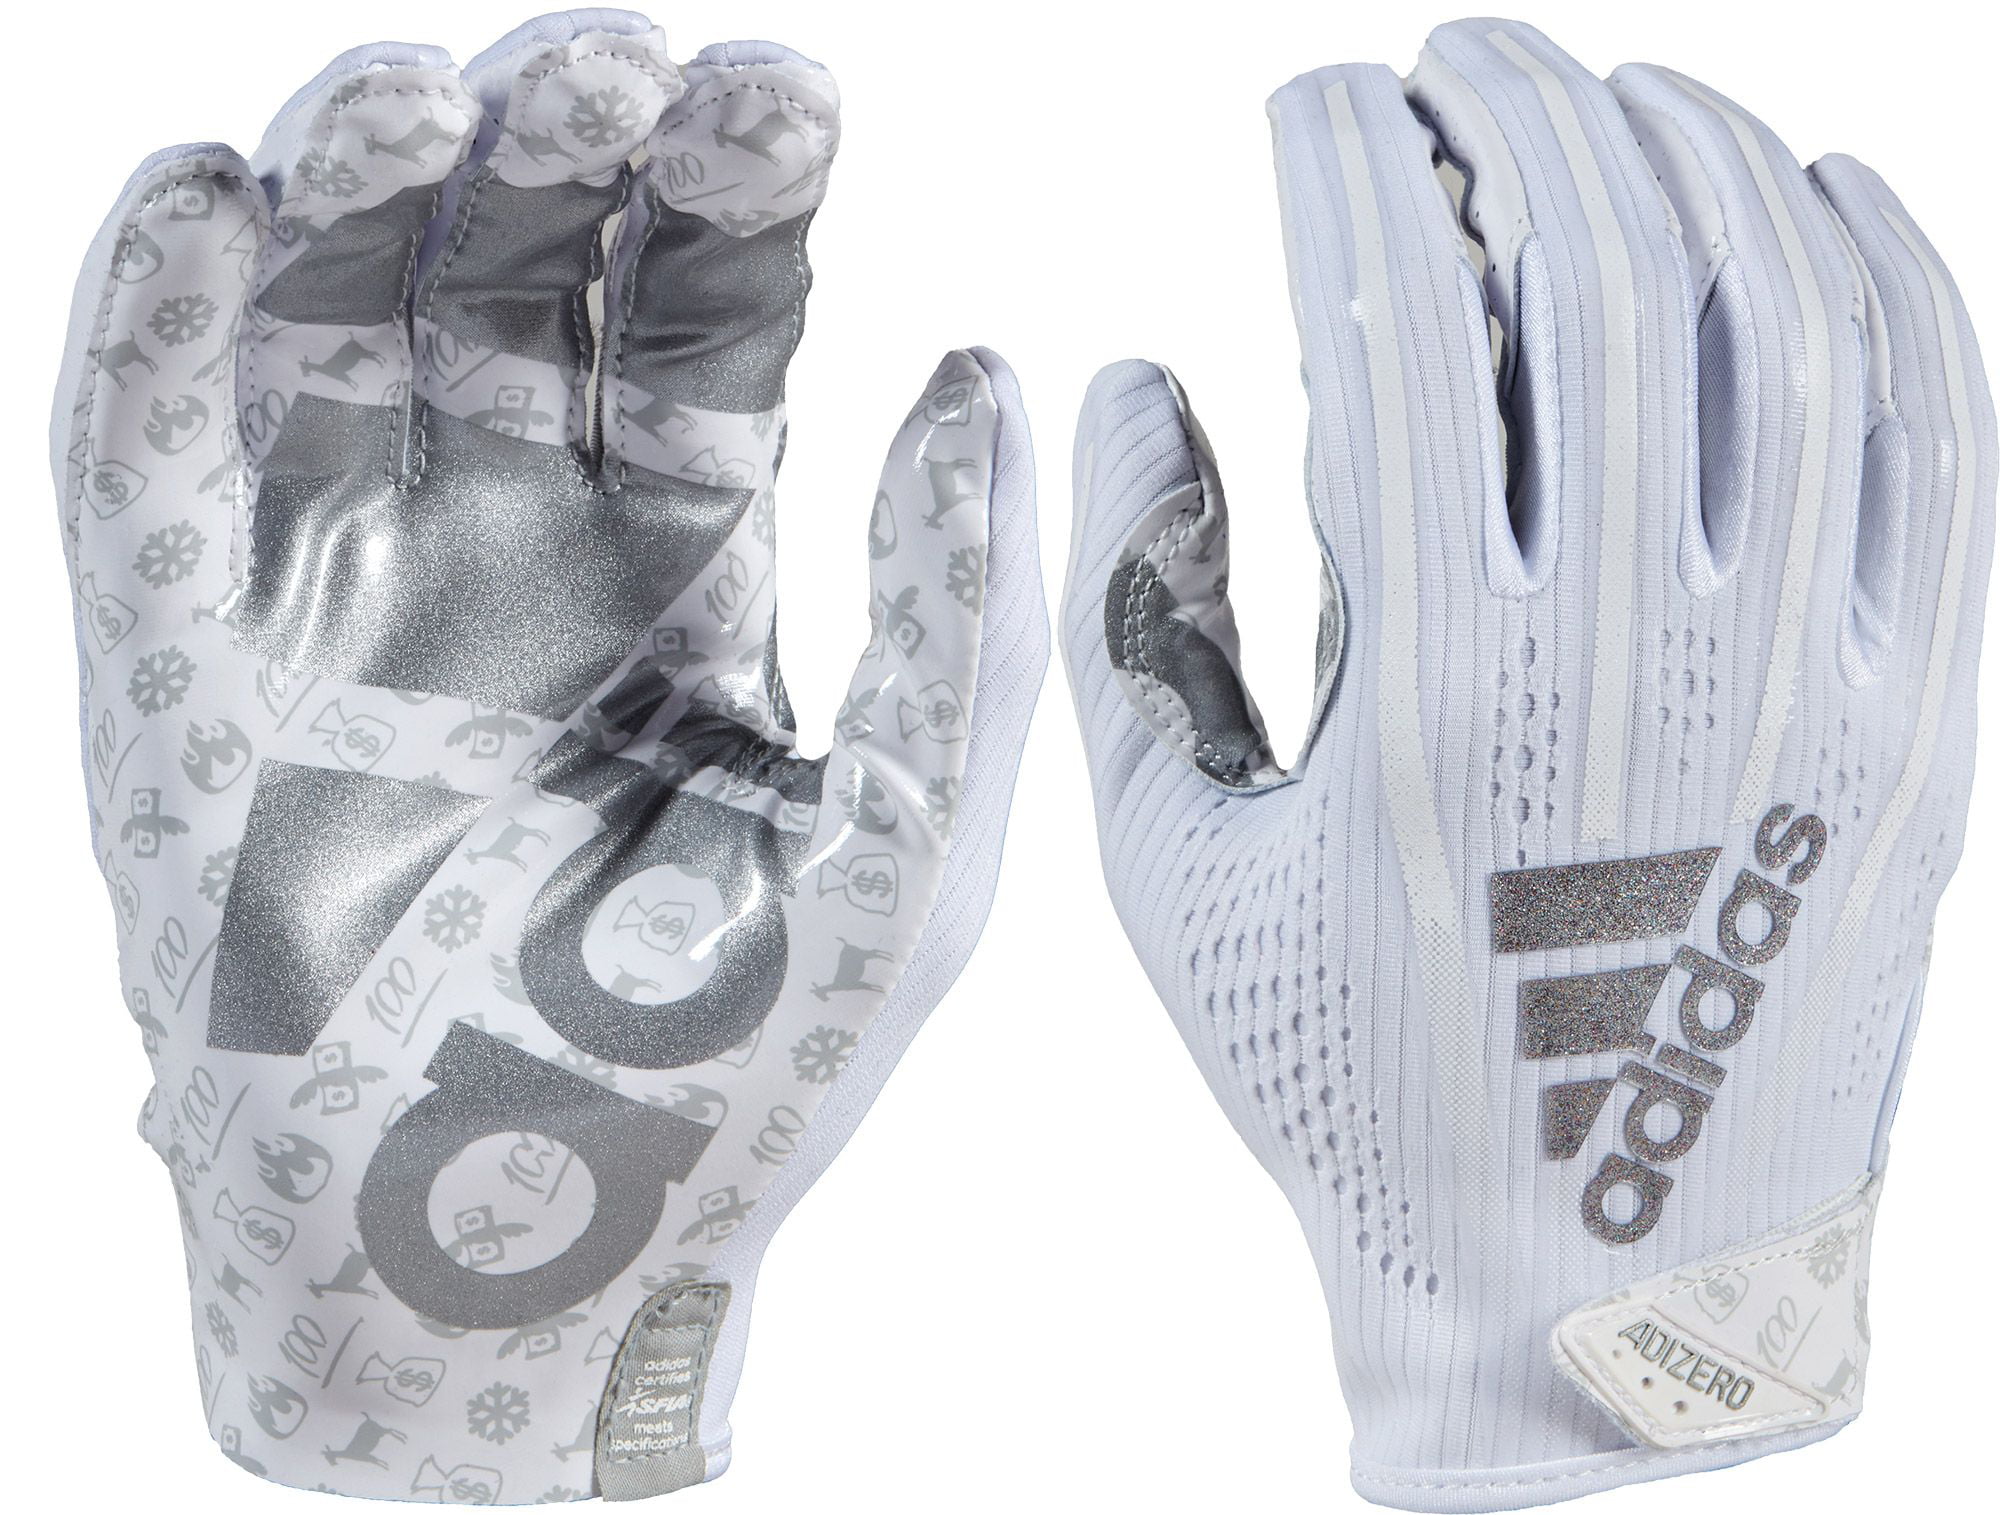 adidas youth football gloves